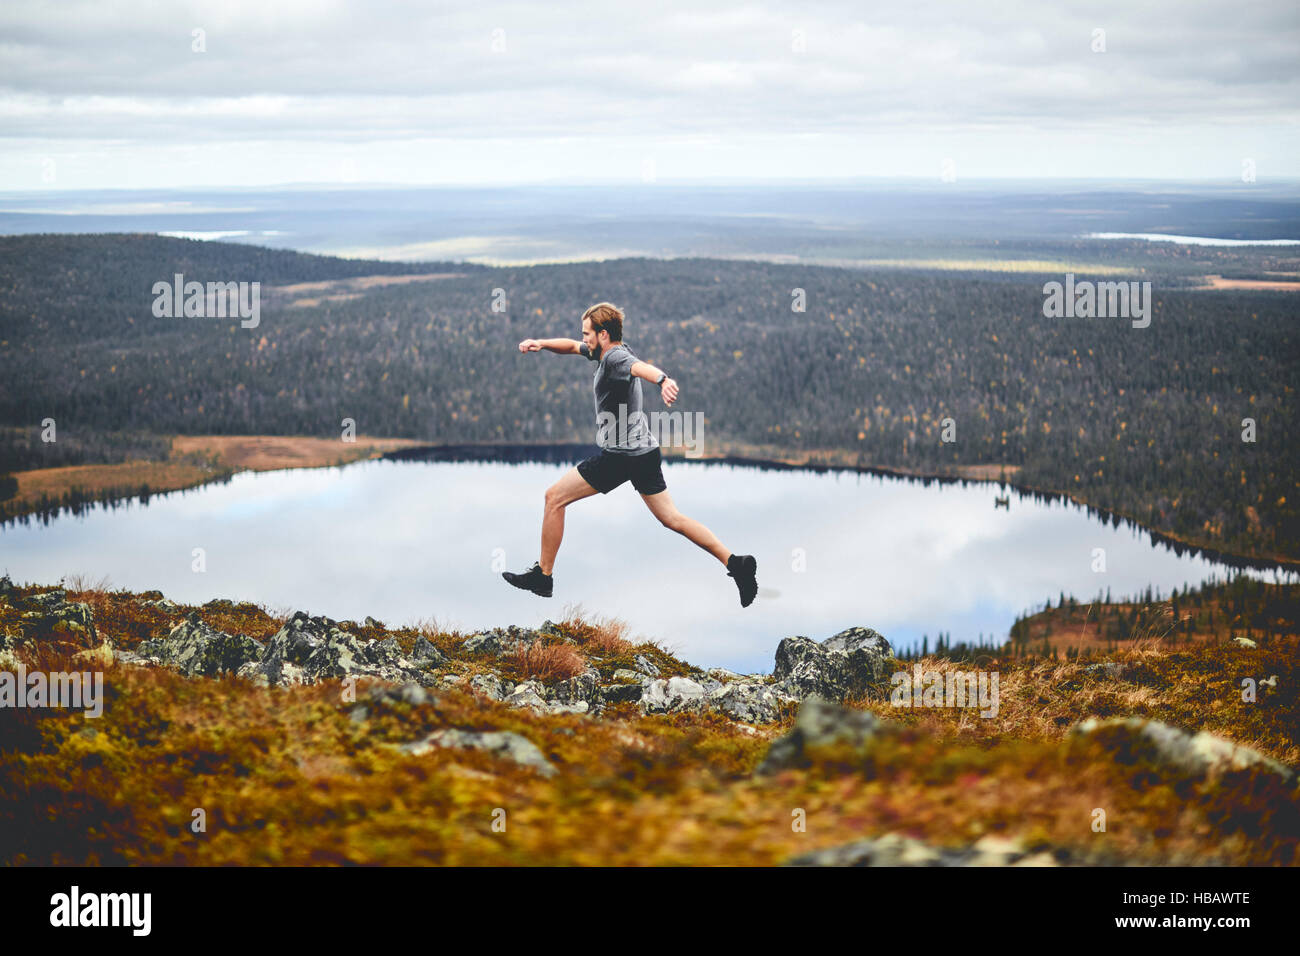 Mann sprinten auf felsigen Klippe, Keimiotunturi, Lappland, Finnland Stockfoto